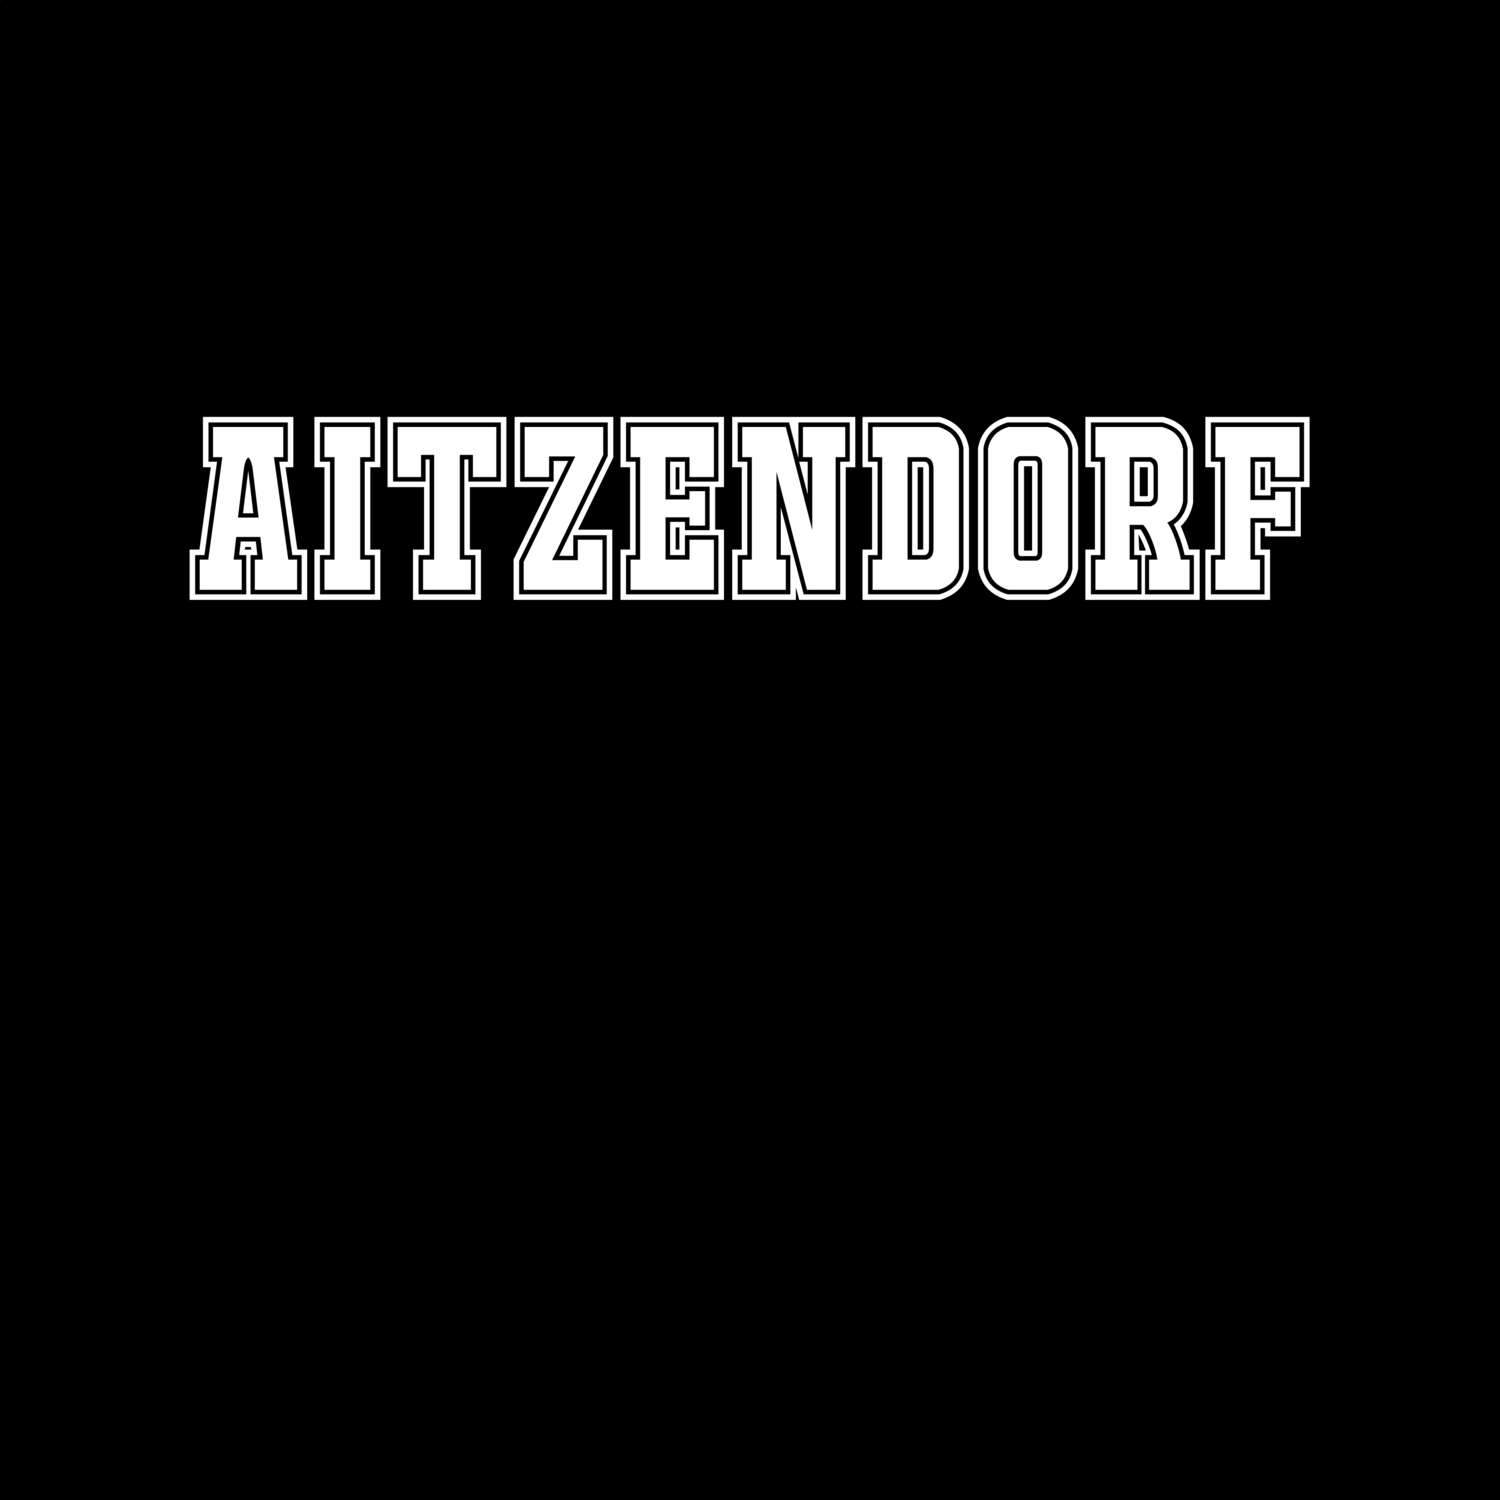 Aitzendorf T-Shirt »Classic«